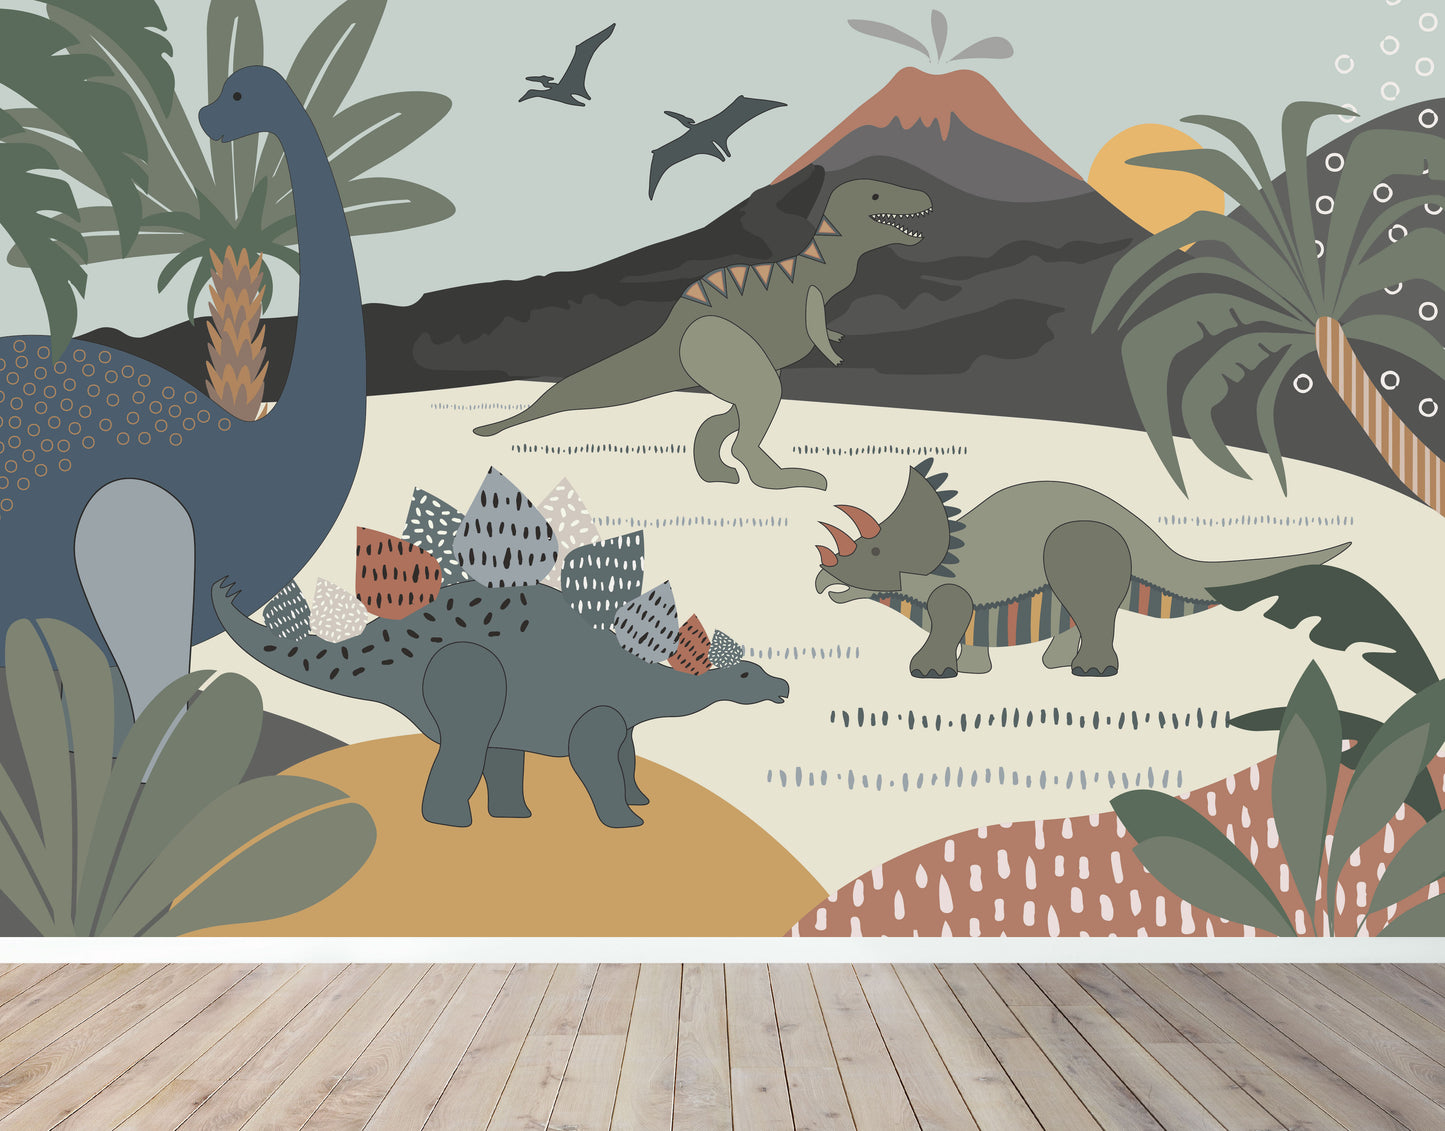 Dinosaur and Friends Wallpaper Mural - Munks and Me Wallpaper